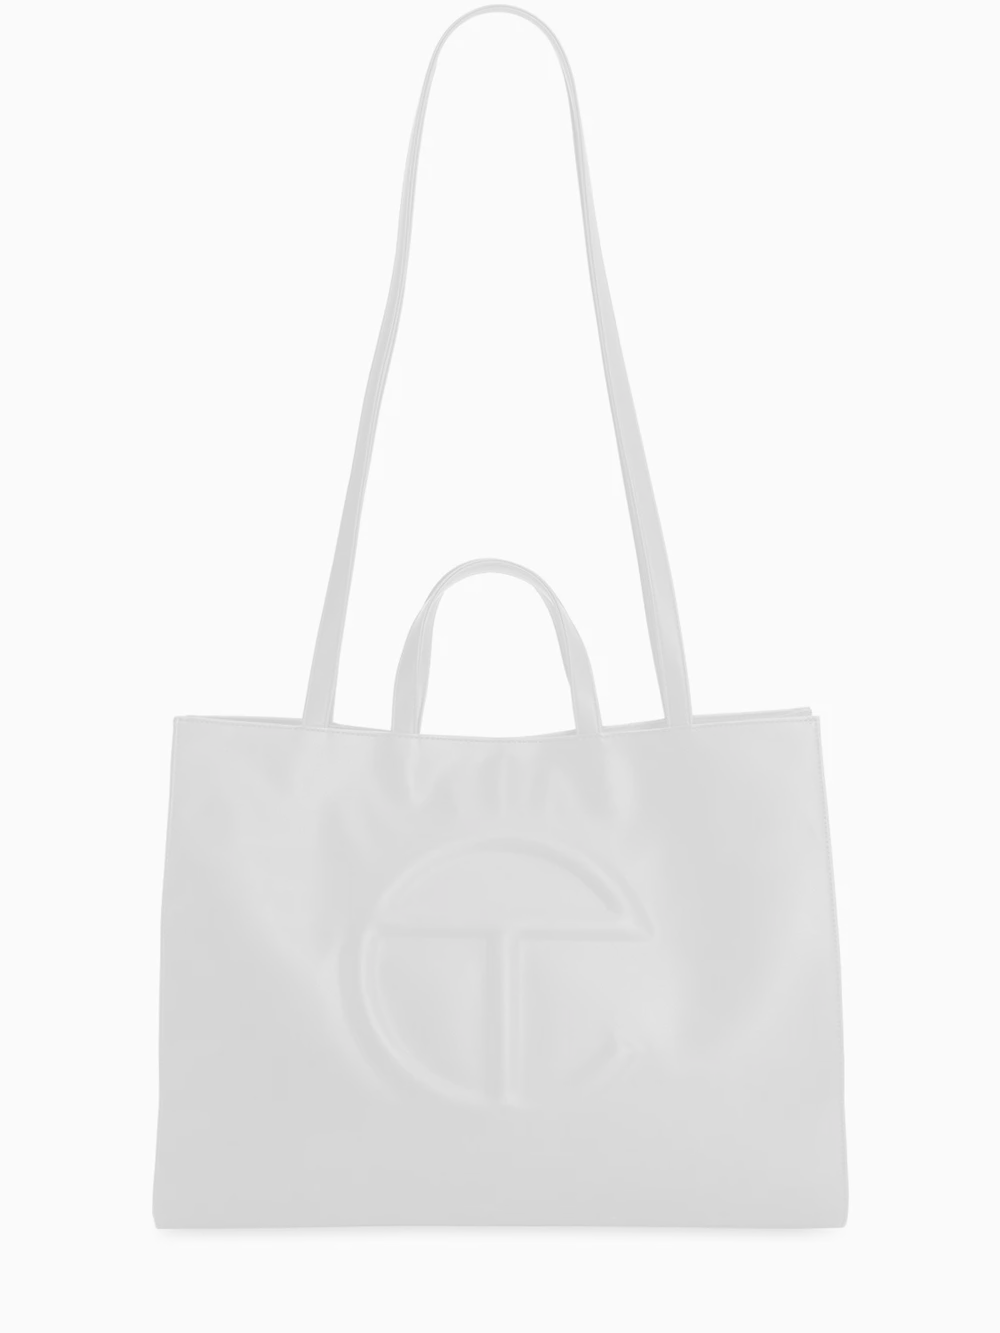 #3 Telfar shopping bag